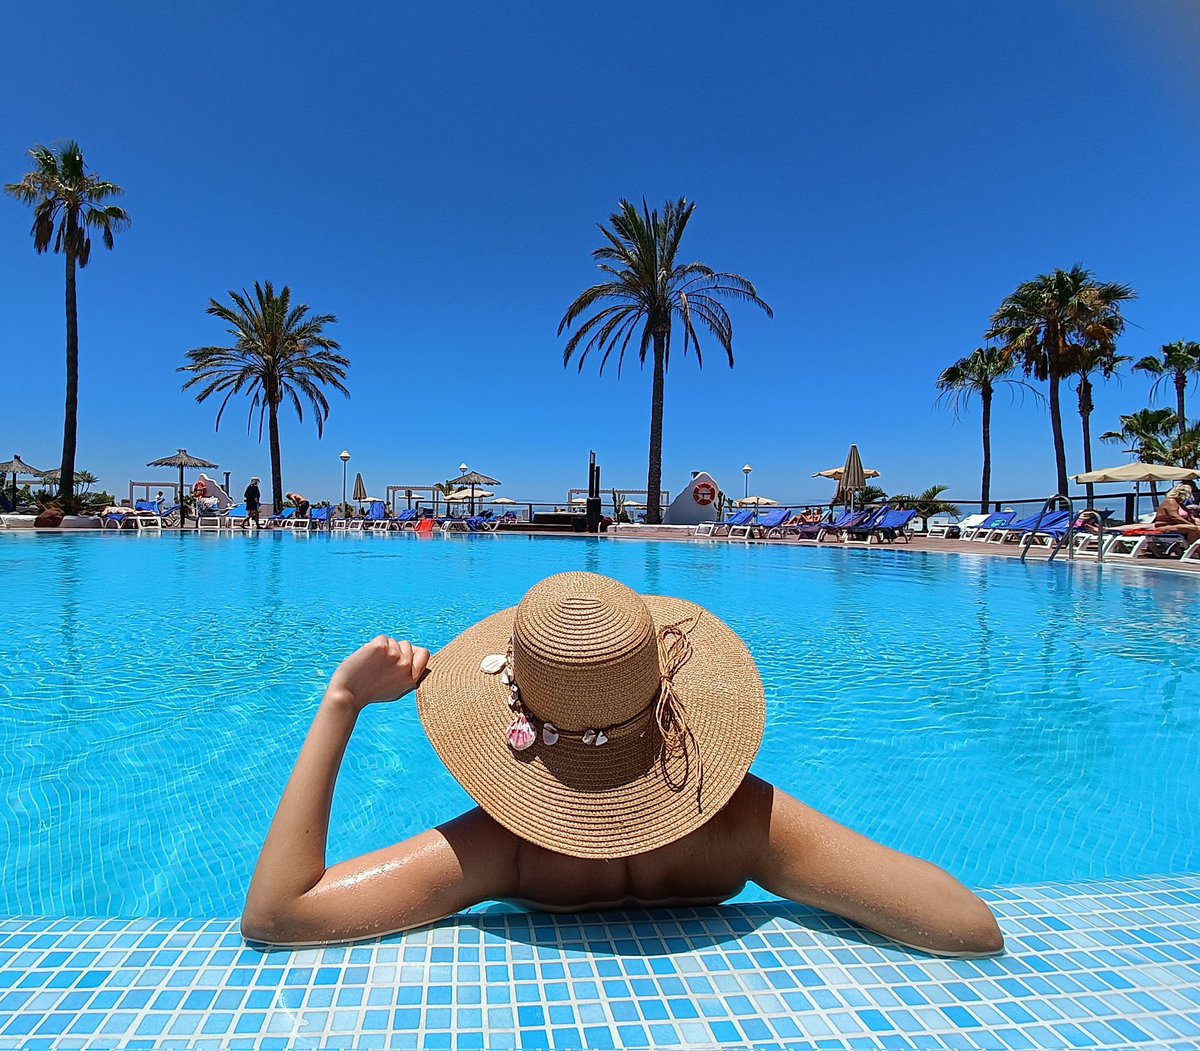 Enjoying! ☀️🌊🌴

#lanzarote #papagayo #pool #islascanarias #canaryislands #lanzaroteisland #canaries #paradise #holidays #lovelanzarote #ig_lanzarote #canarias #enjoying #travelspain #ilovespain #spain